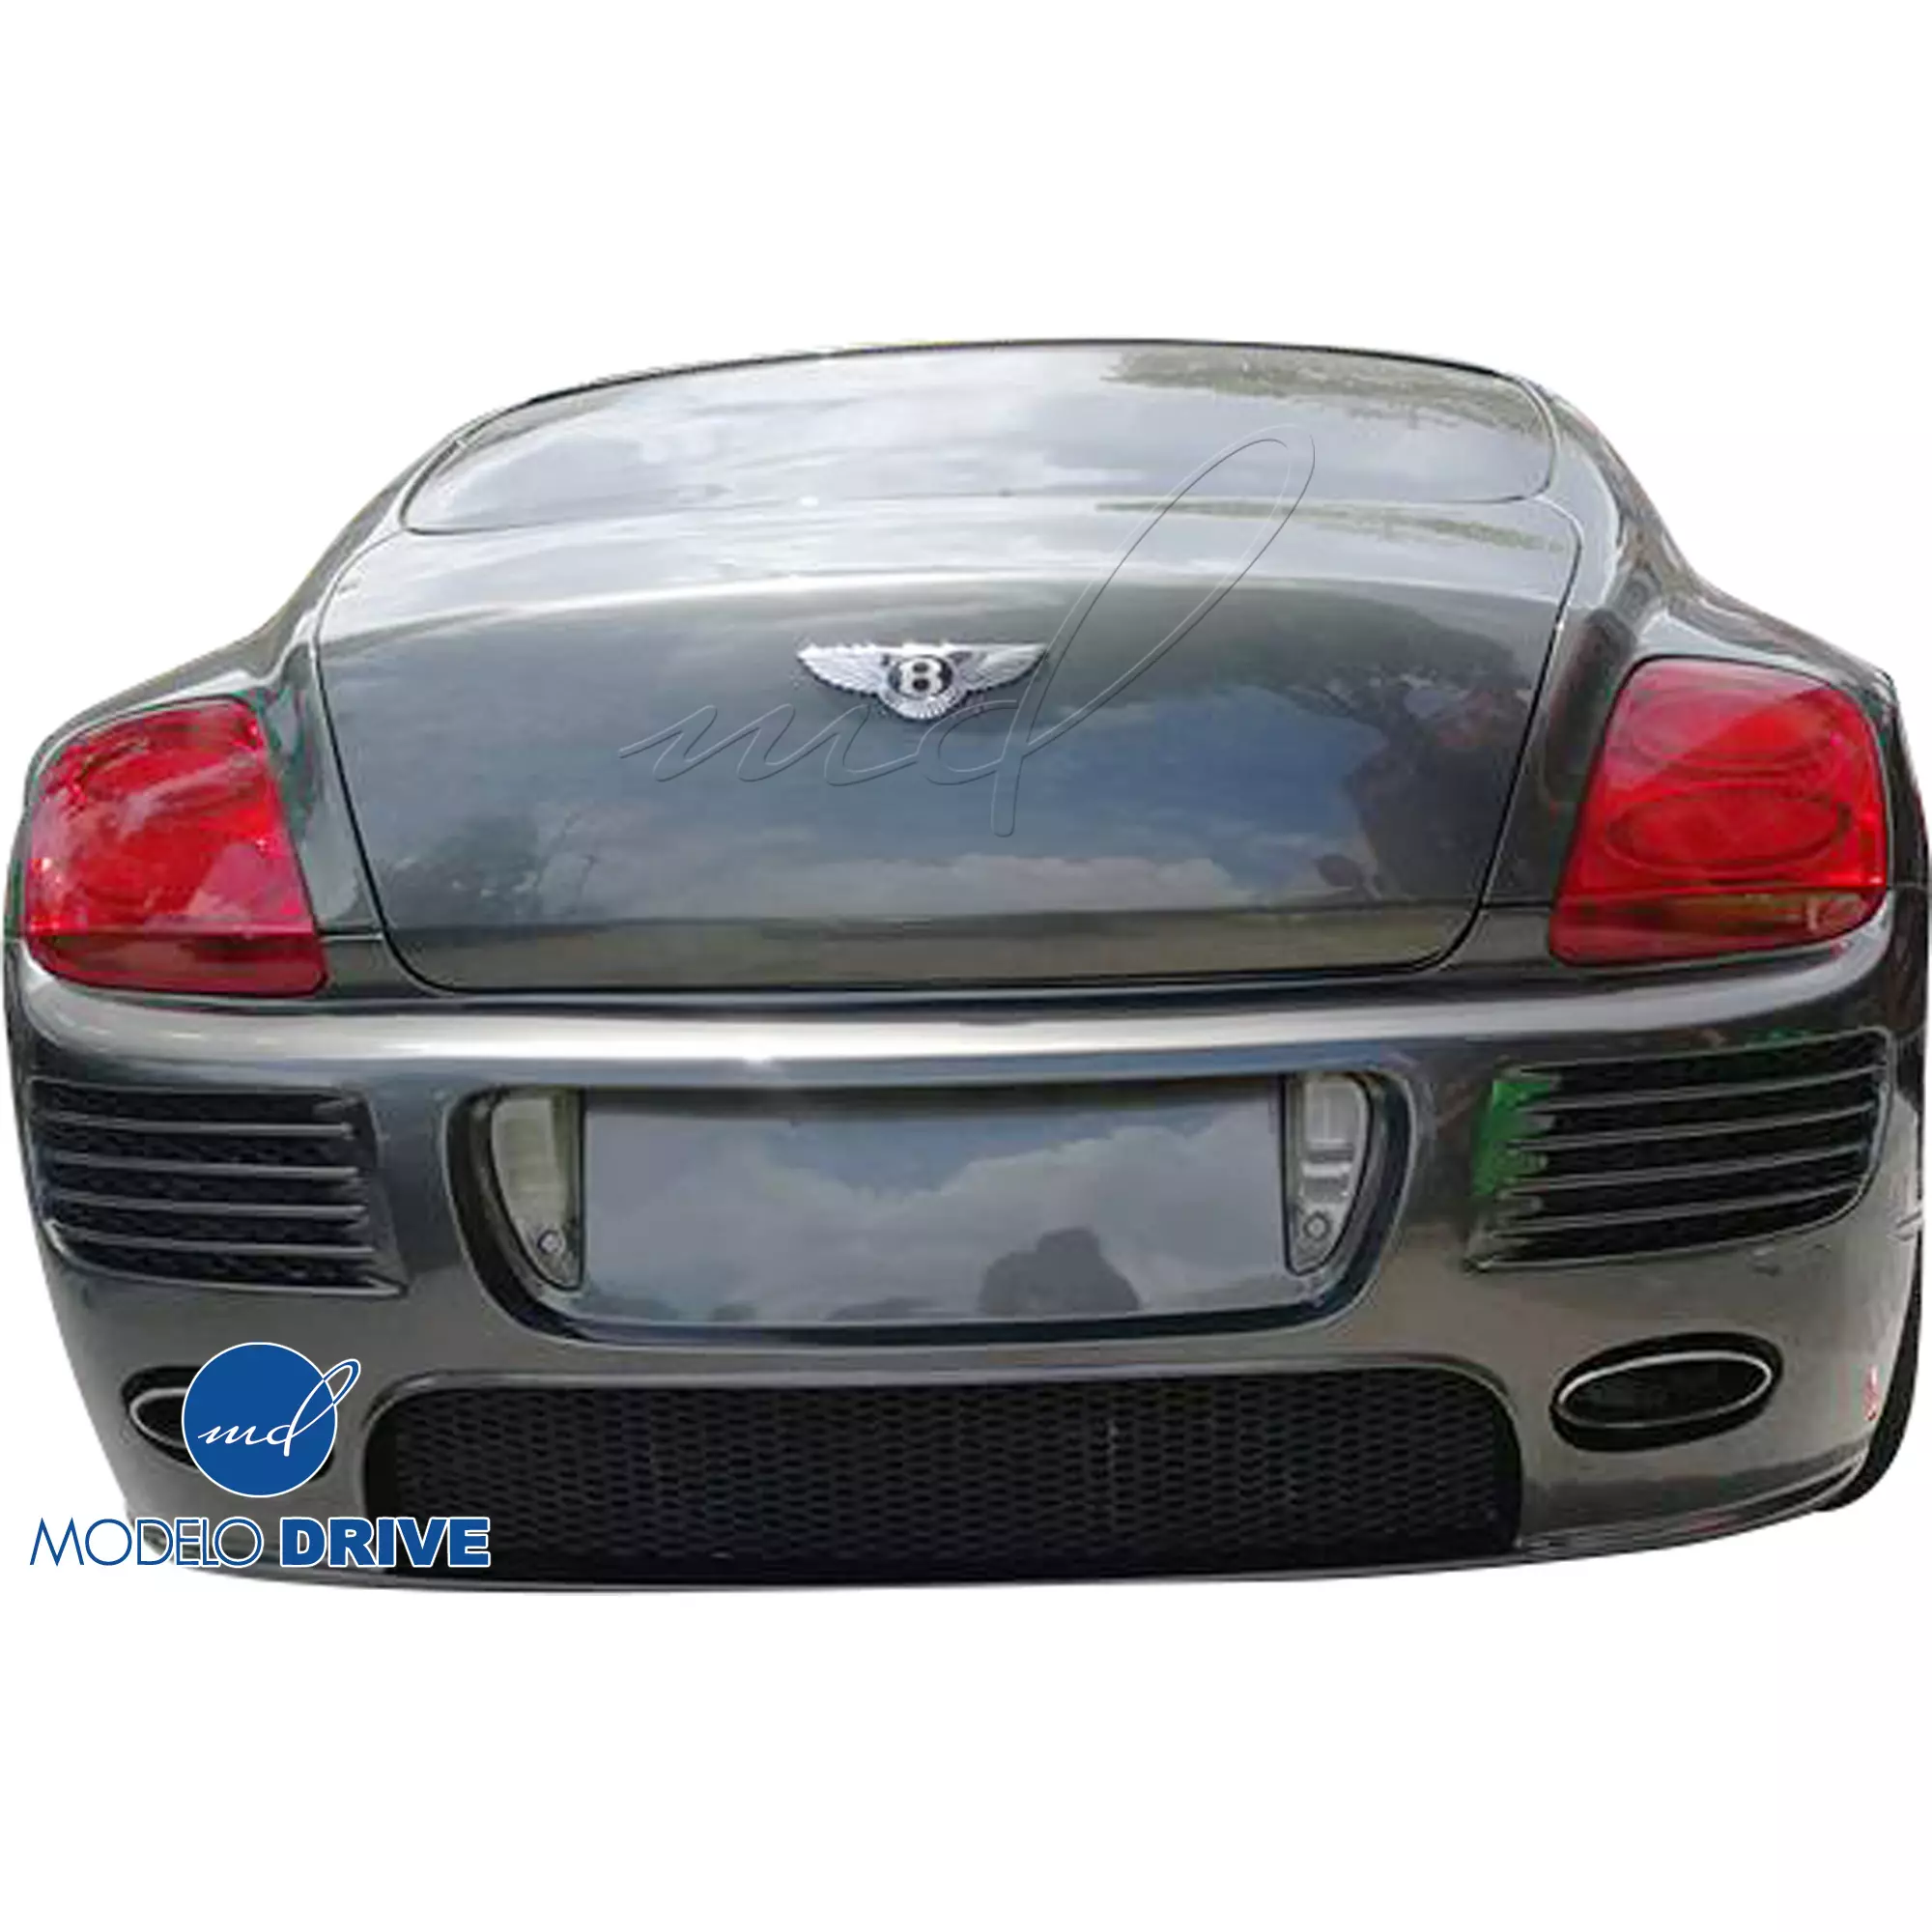 ModeloDrive FRP AI Rear Bumper > Bentley Continental GT GTC 2003-2010 > 2dr Coupe - Image 3